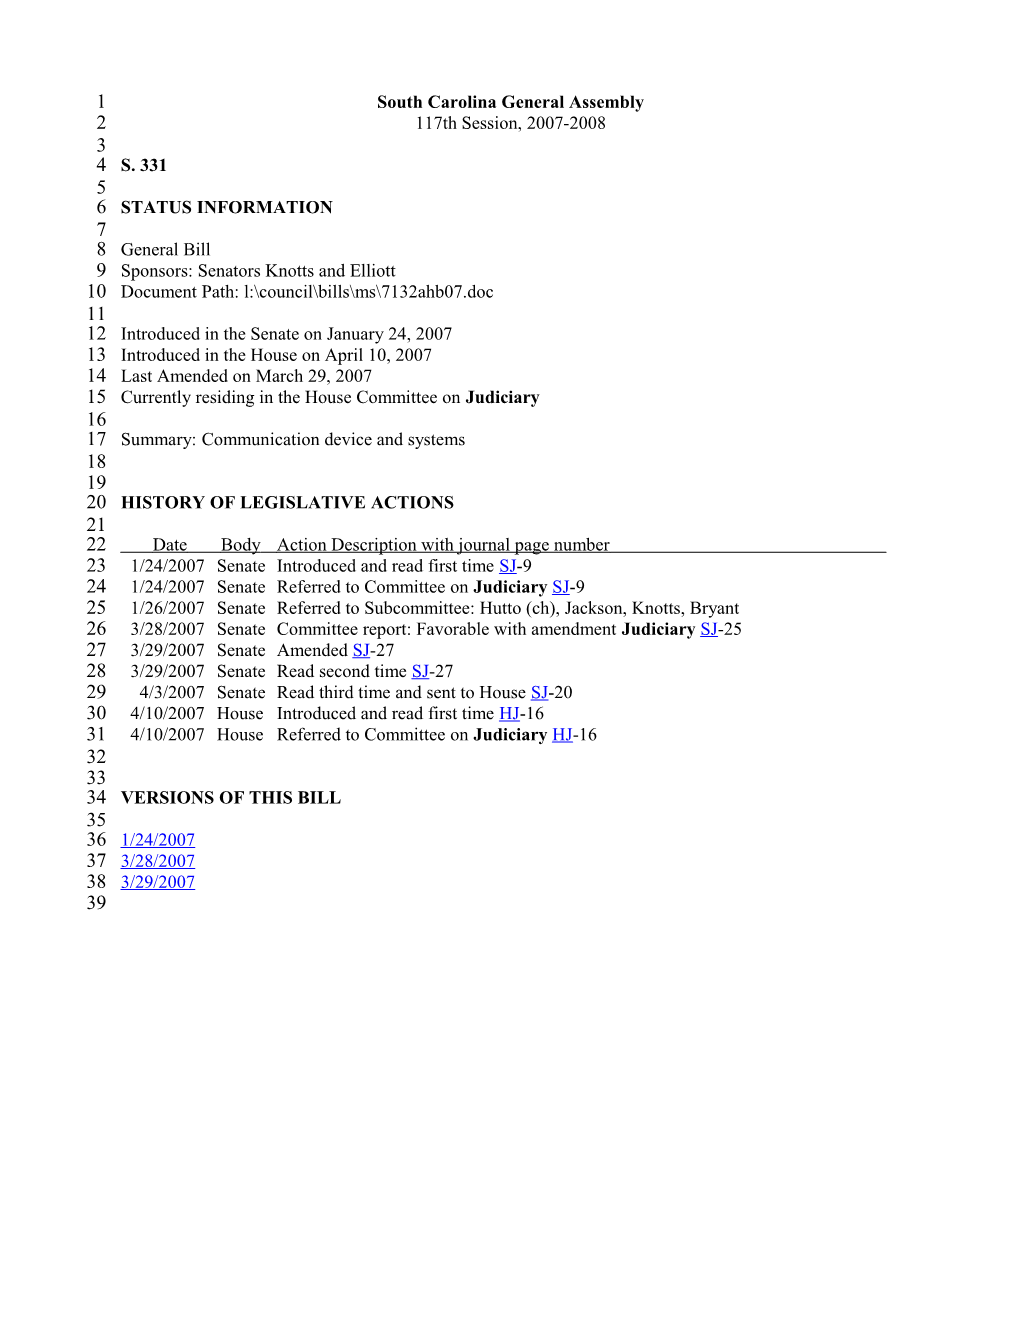 2007-2008 Bill 331: Communication Device and Systems - South Carolina Legislature Online